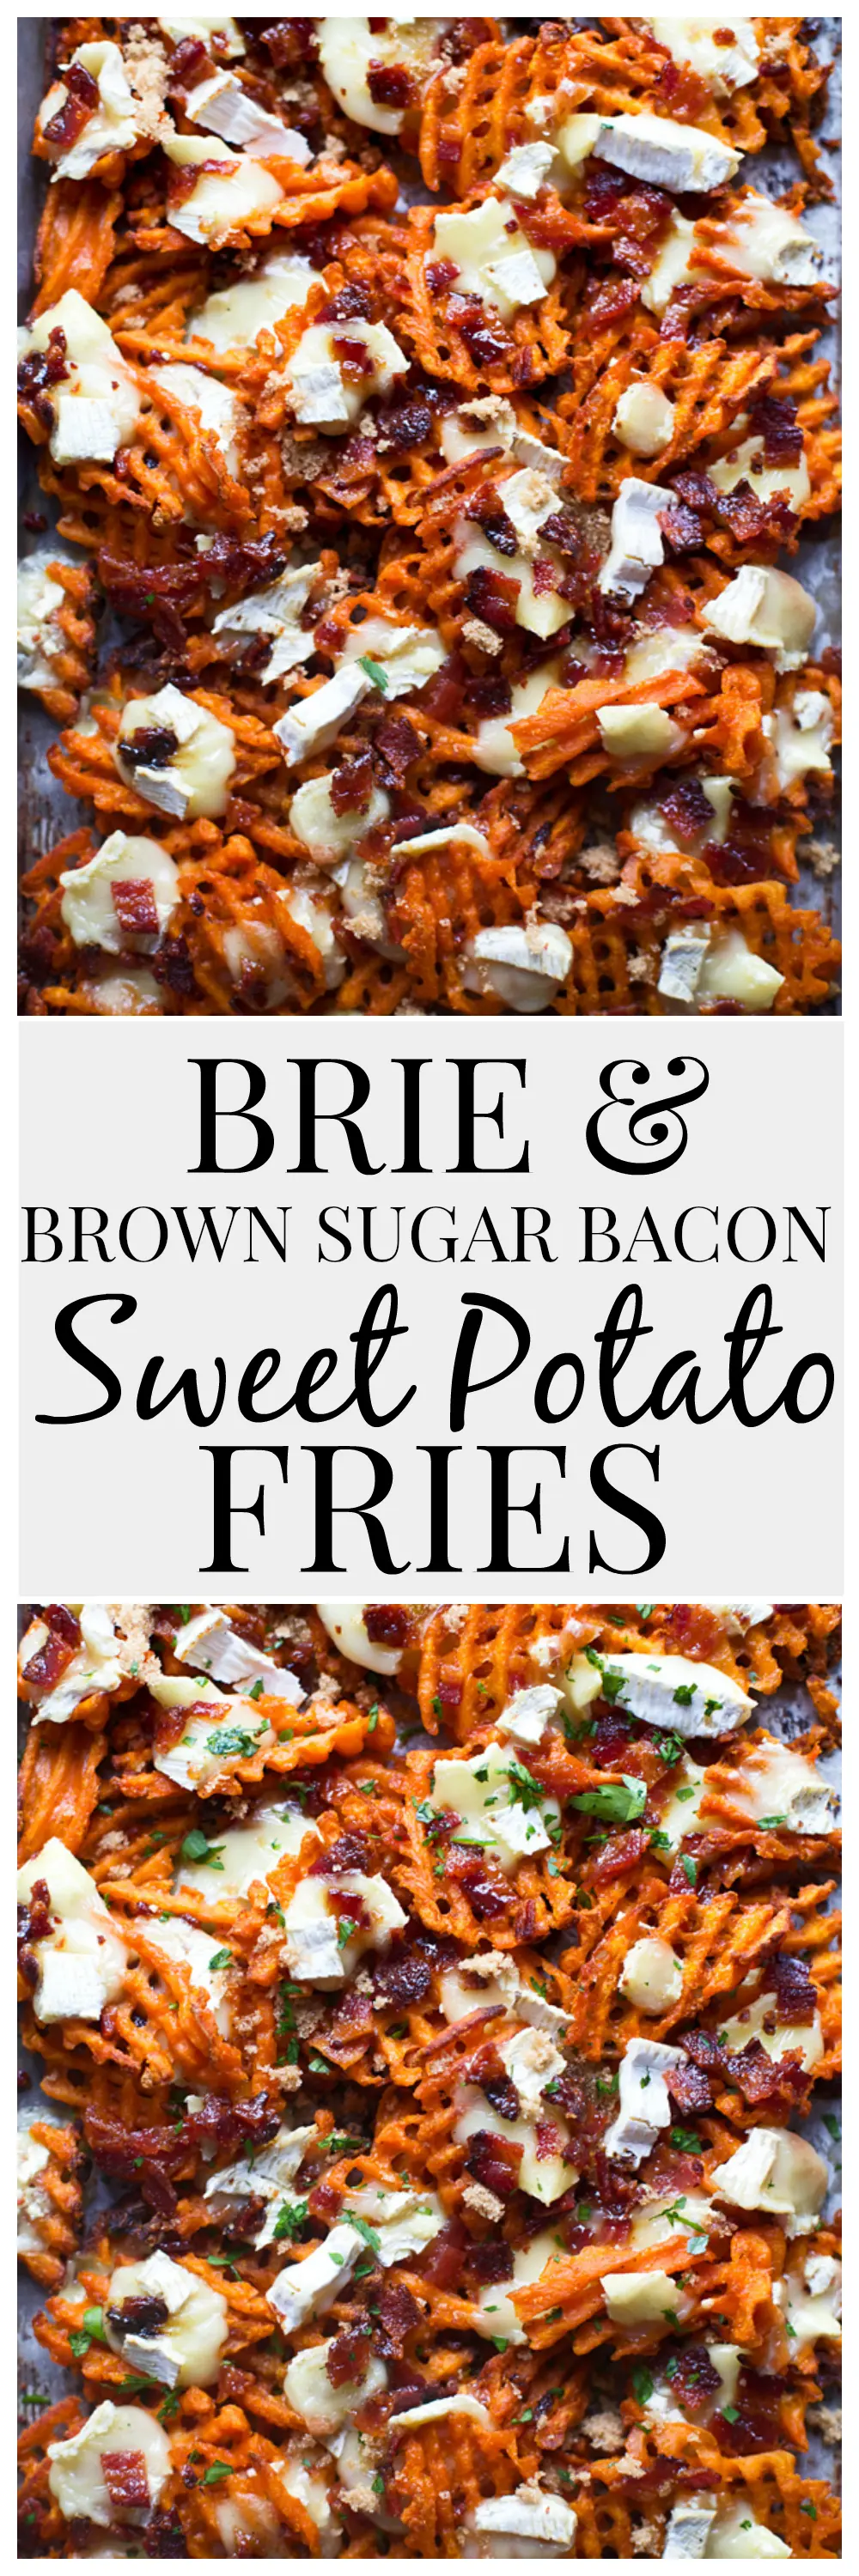 Brie & Brown Sugar Bacon Sweet Potato Fries